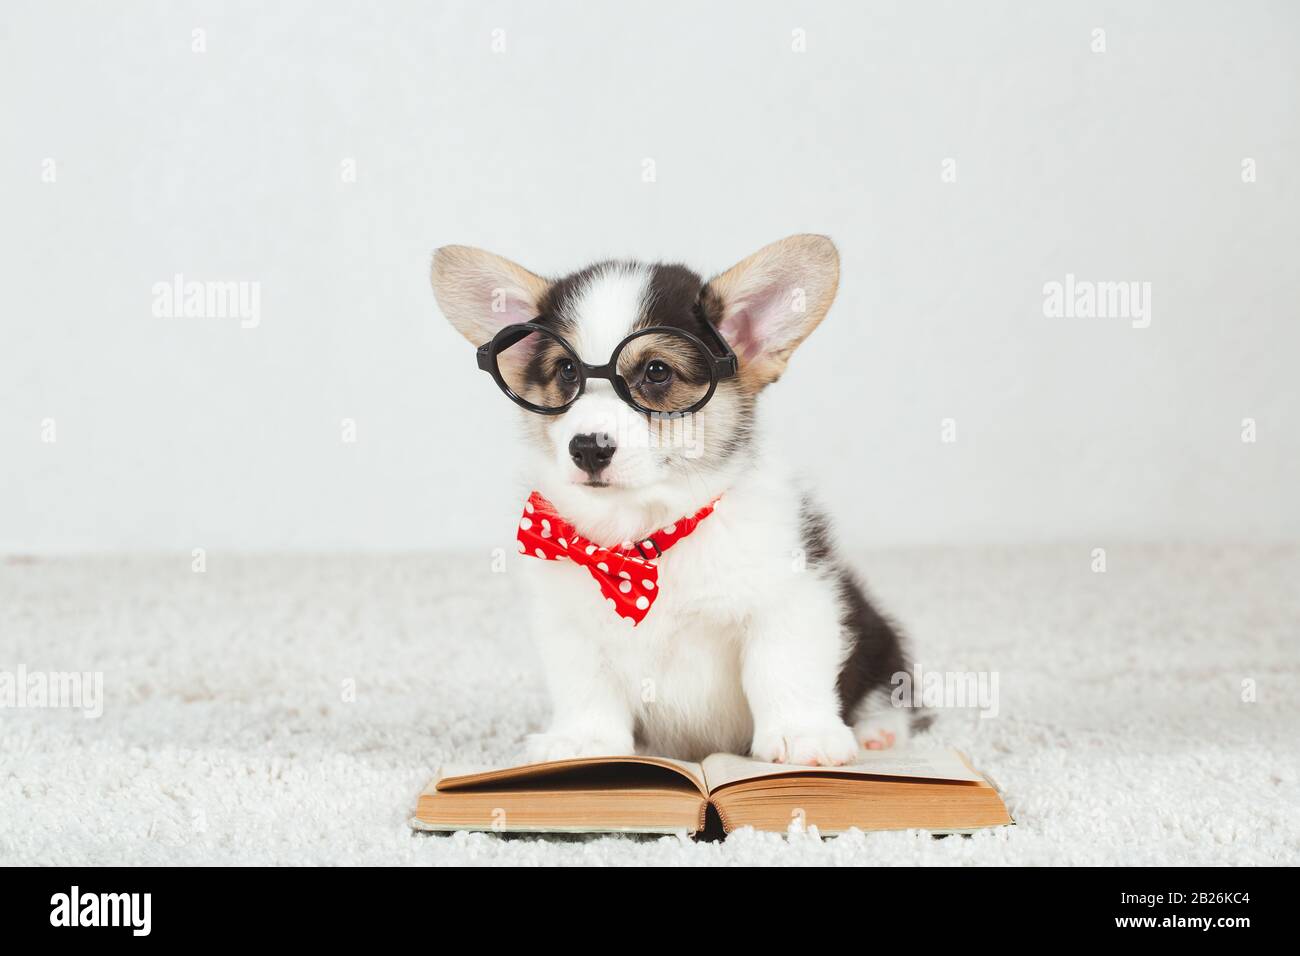 Corgi dog puppy with glasses Stock Photo